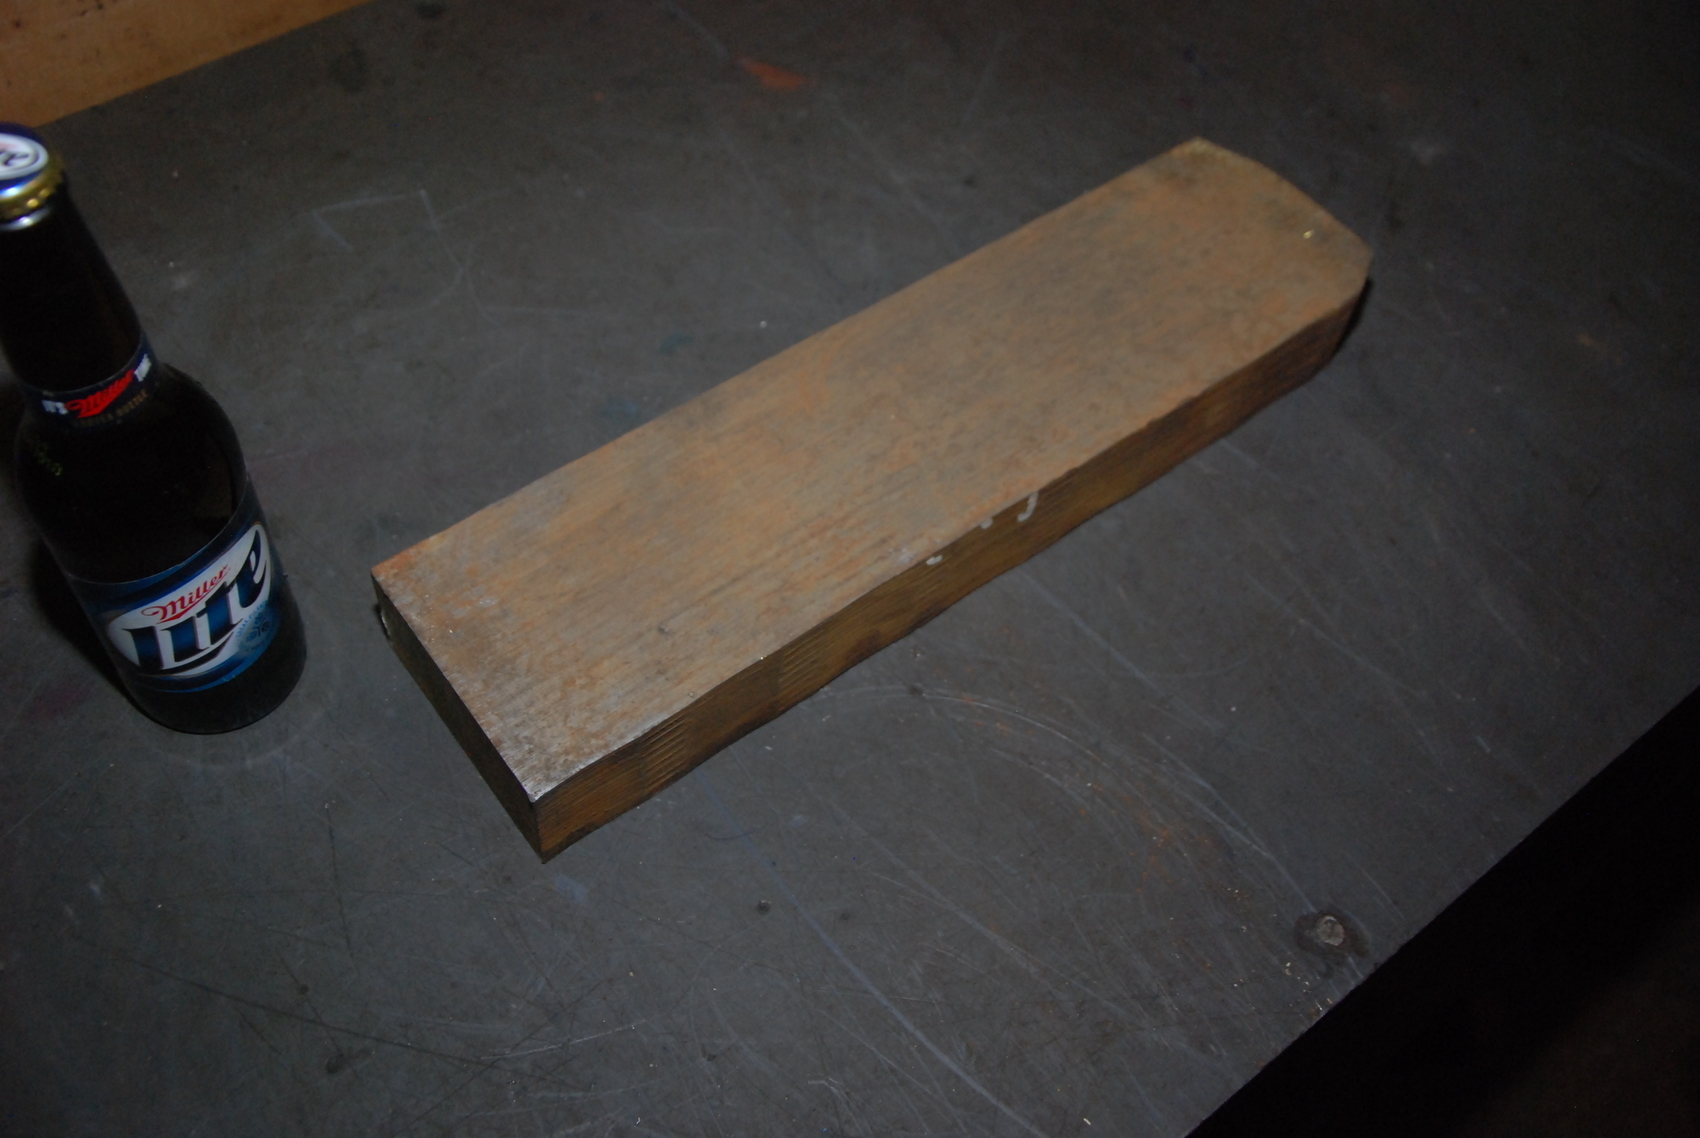 ONE steel Rectangular Bar for blacksmith anvil,15-5/8x4x1-7/8";32 lbs